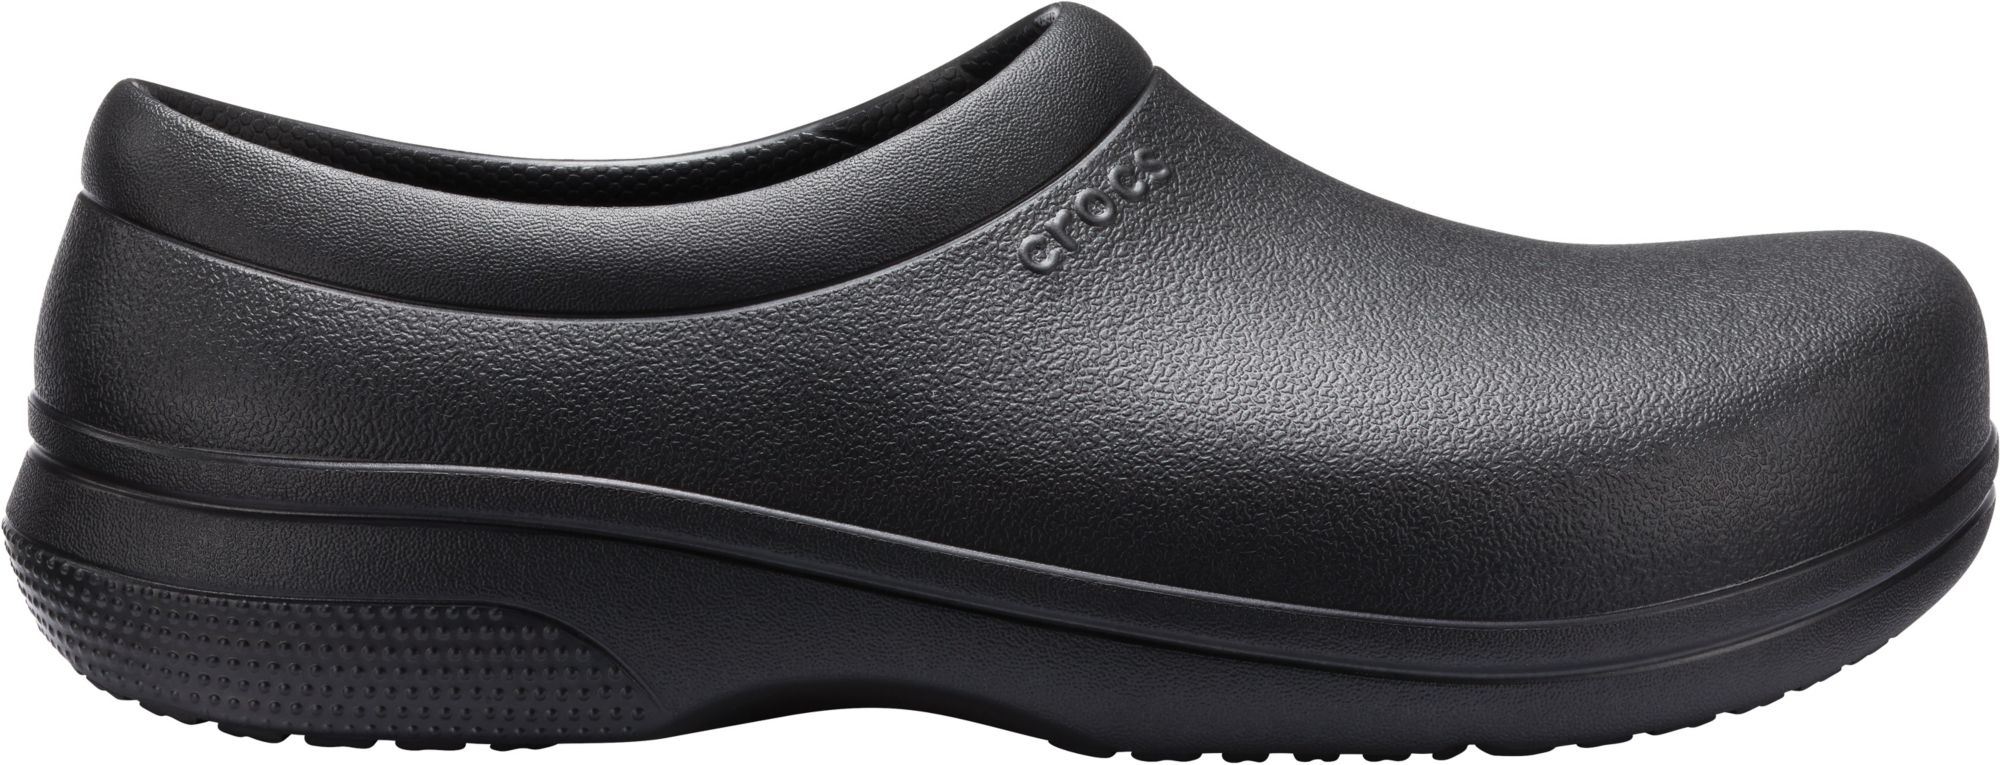 croc work shoes